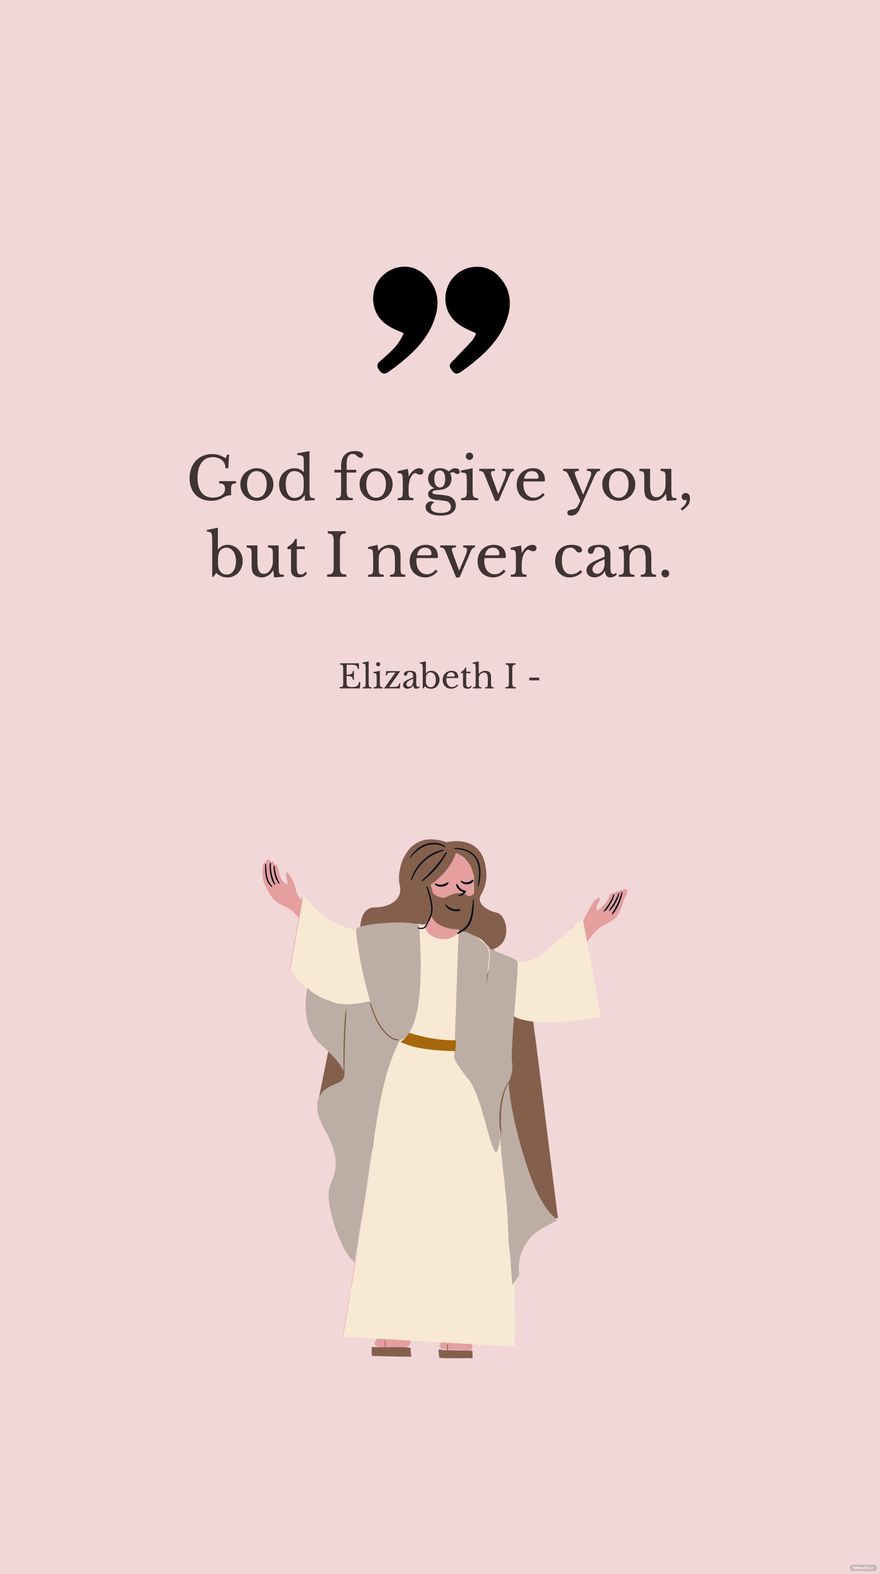 Free Elizabeth I - God forgive you, but I never can. in JPG